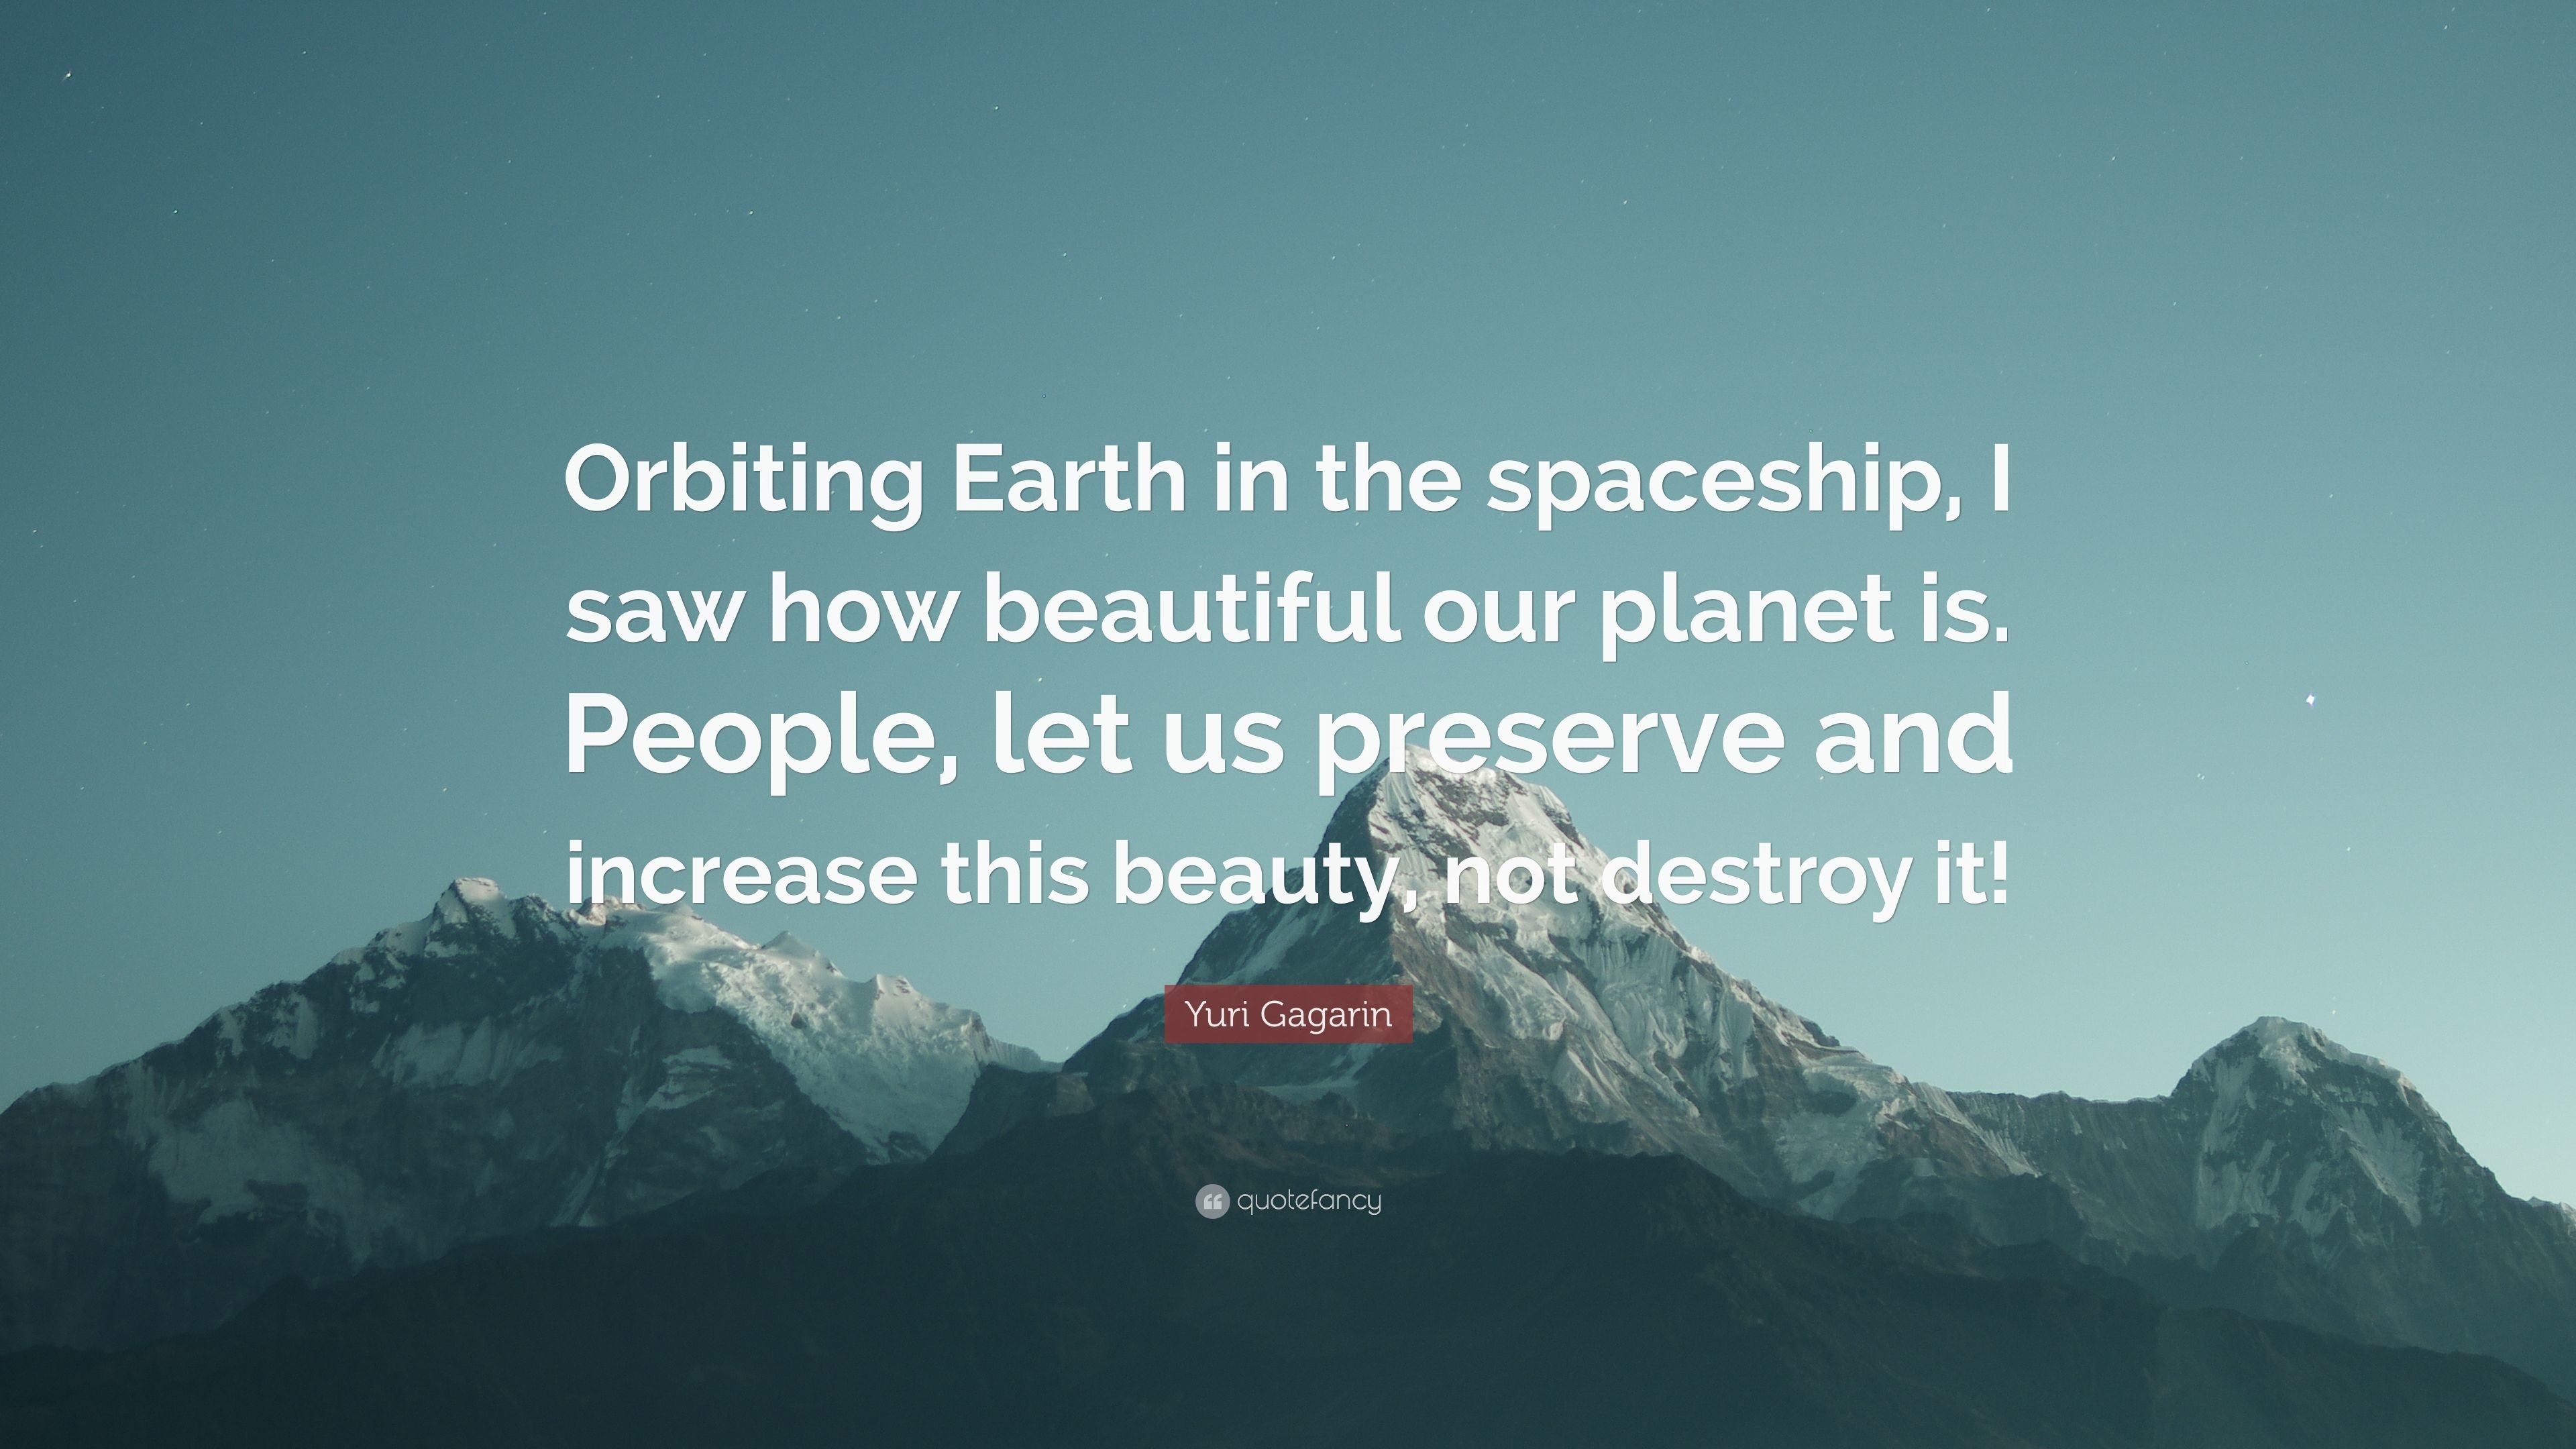 3840x2160 Yuri Gagarin Quote: “Orbiting Earth in the spaceship, I saw how beautiful  our